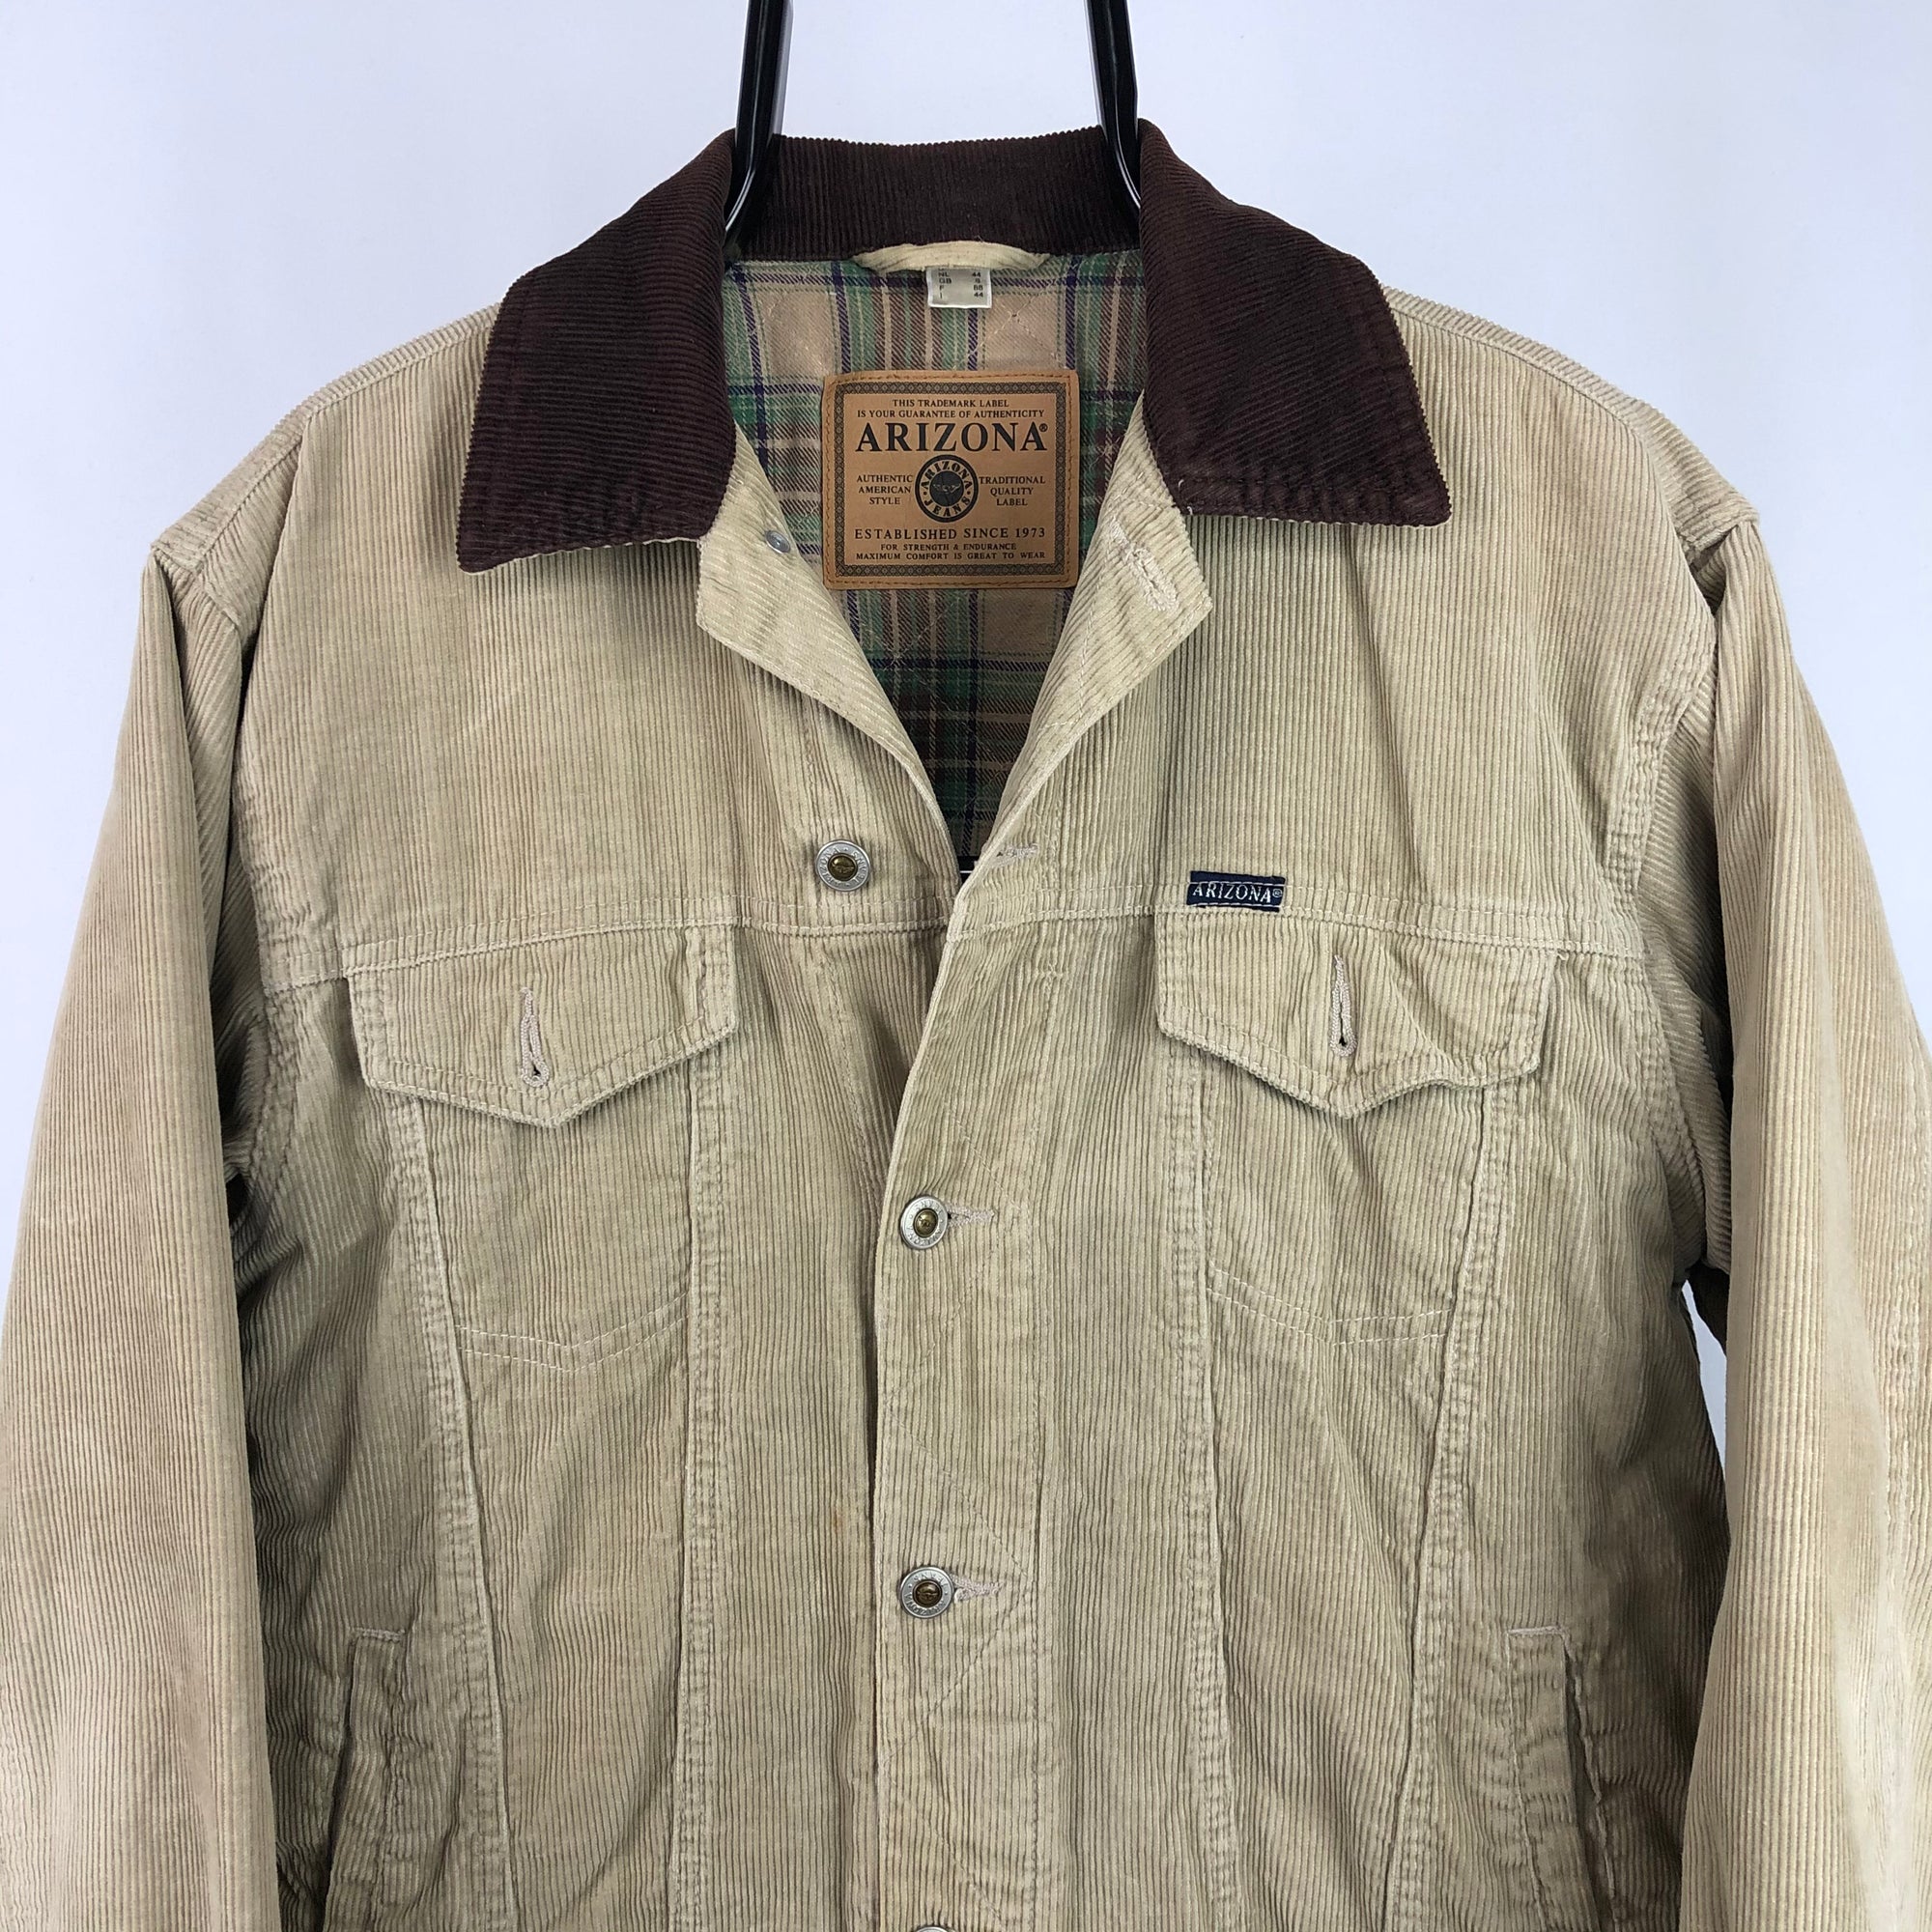 Vintage Plaid-Lined Corduroy Jacket - Men's Small/Women's Medium